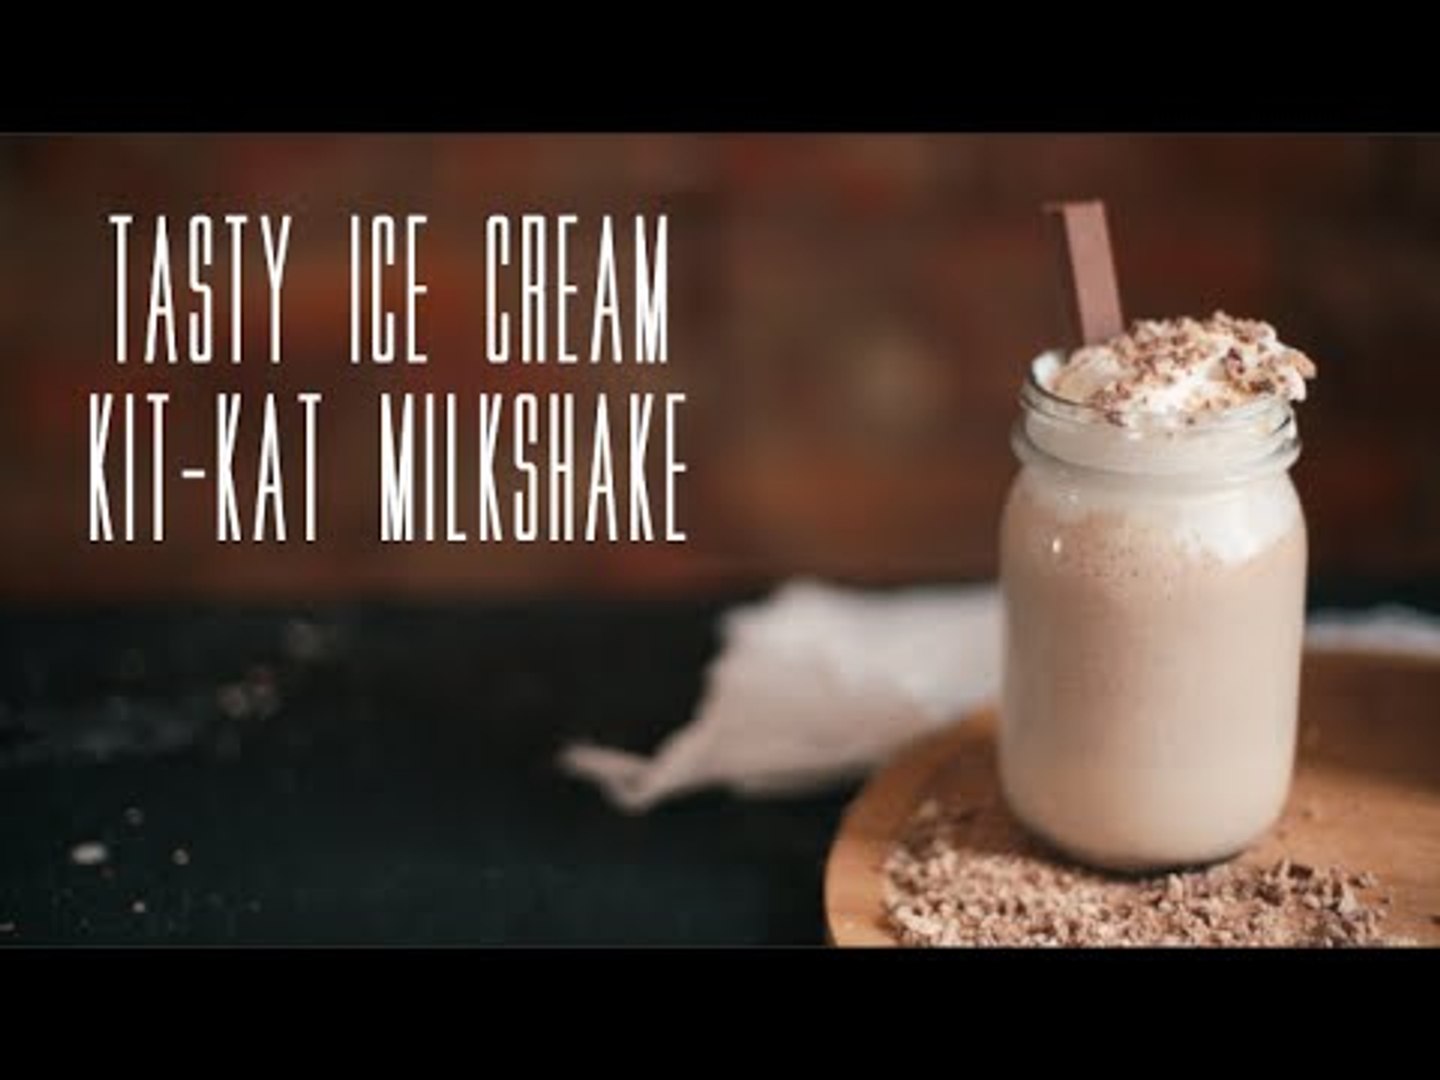 Creamy KitKat Shake Recipe: How to Make Creamy KitKat Shake Recipe